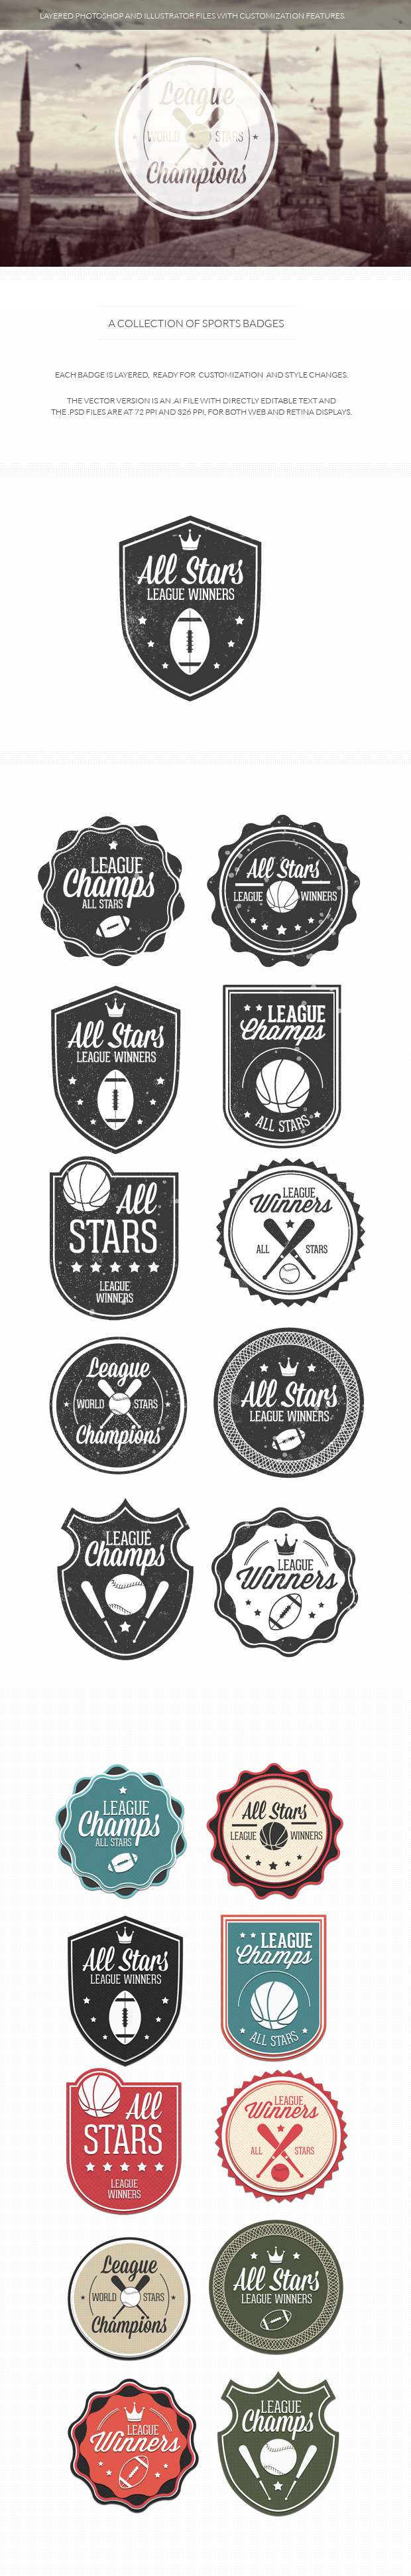 sport badges